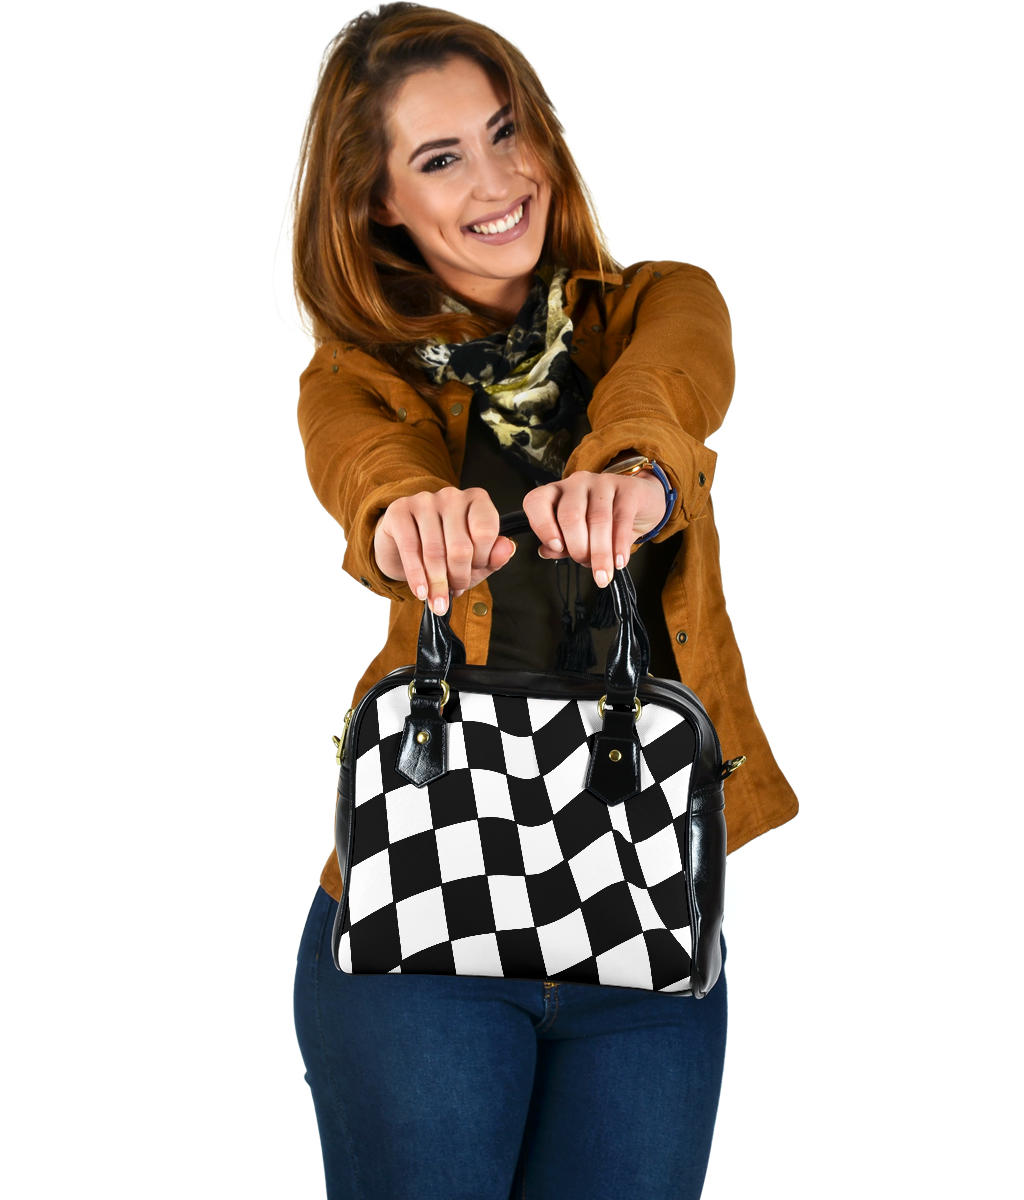 Racing Checkered Flag Shoulder Handbag